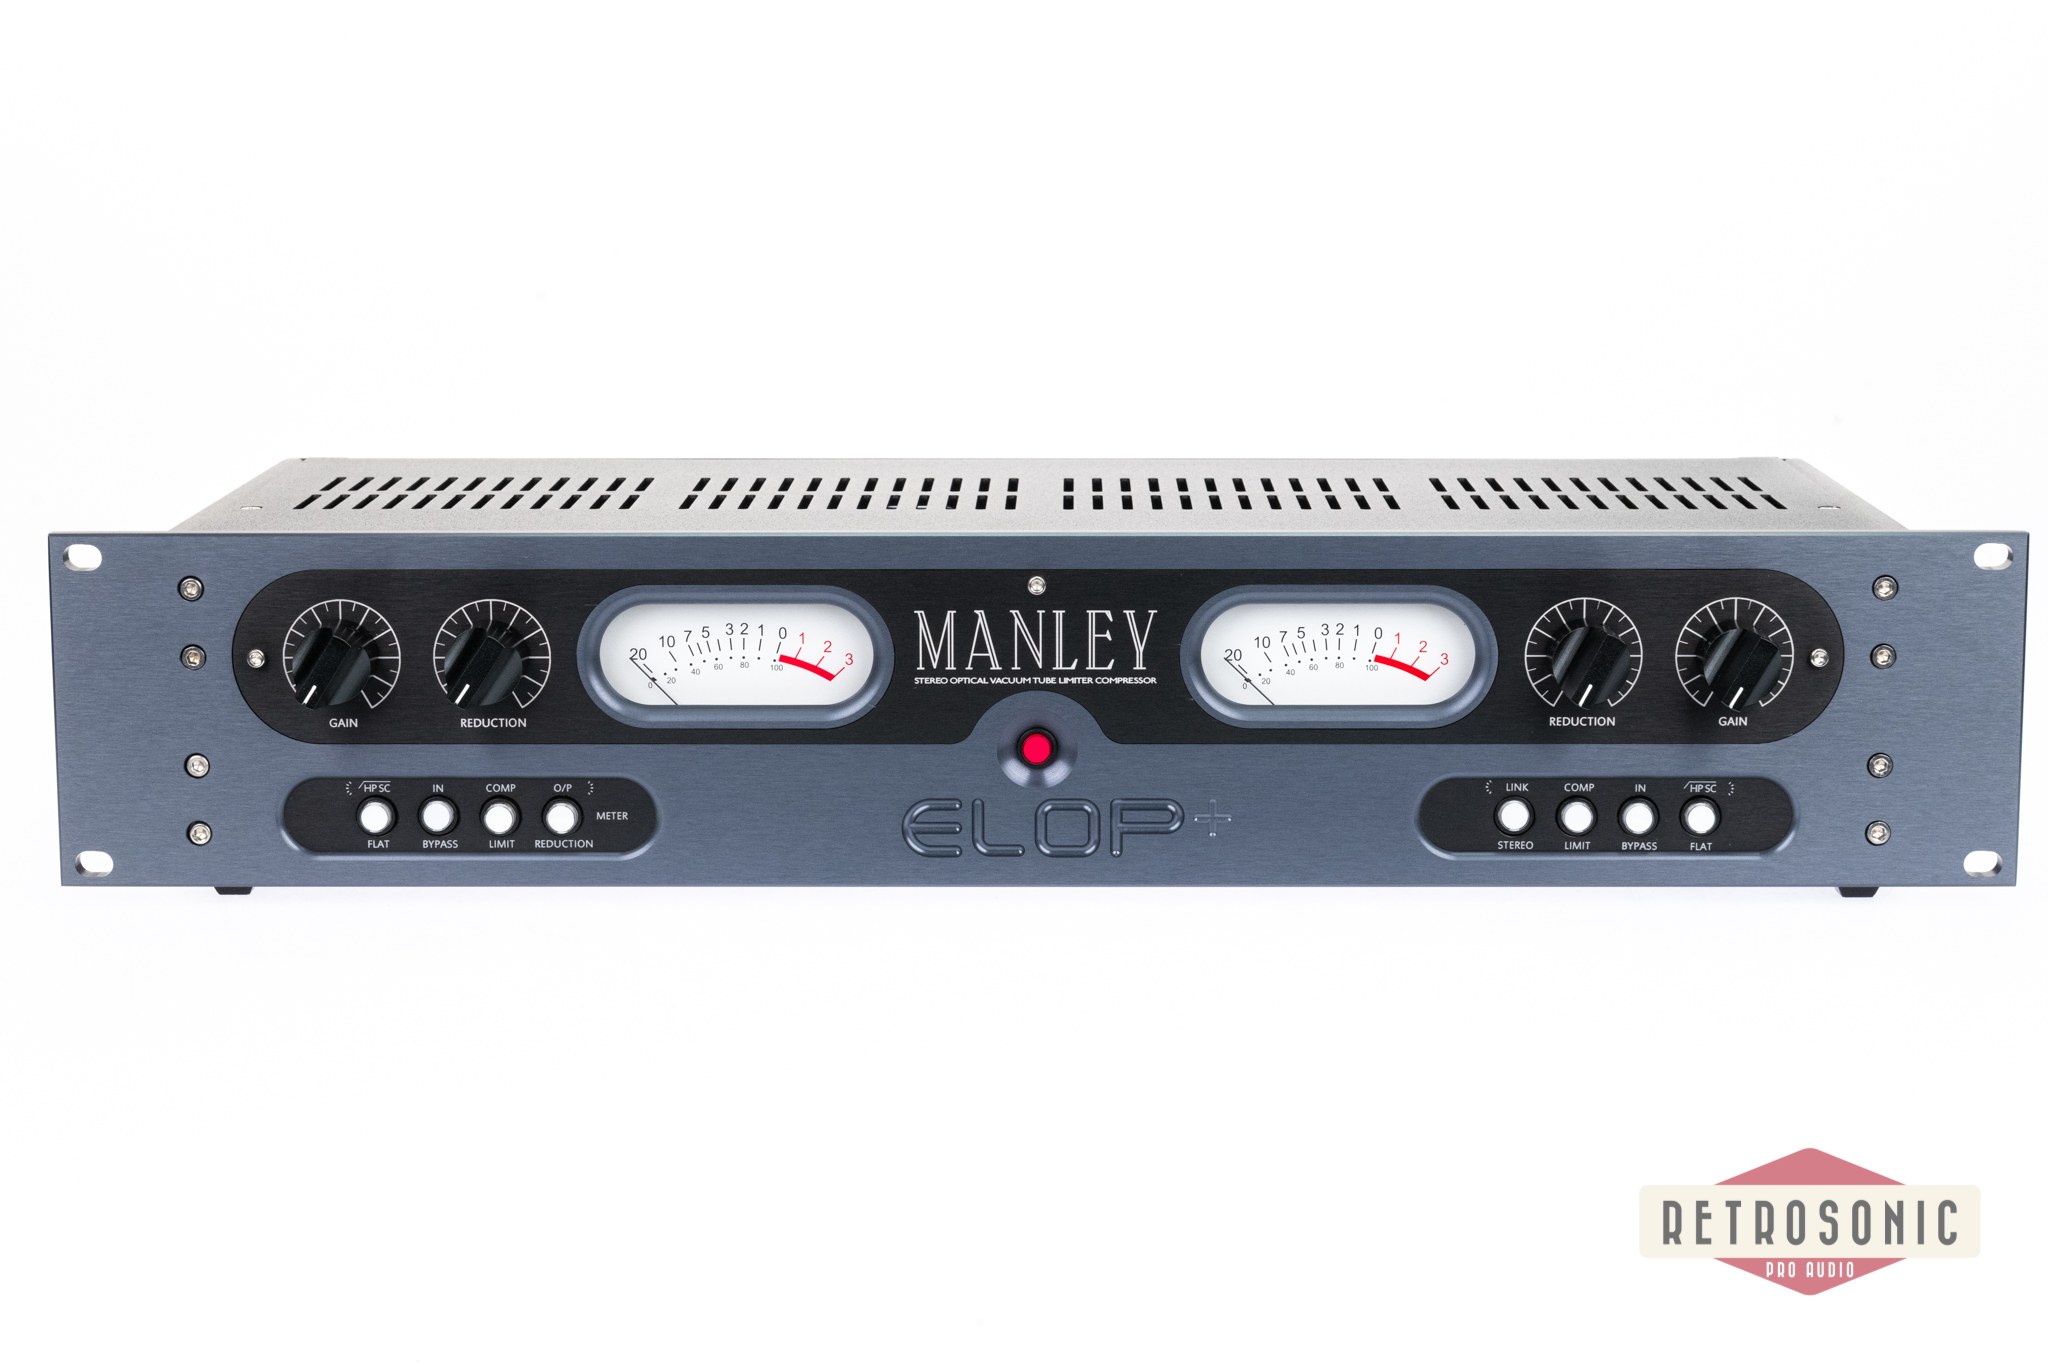 Manley ELOP+ Stereo Limiter Compressor